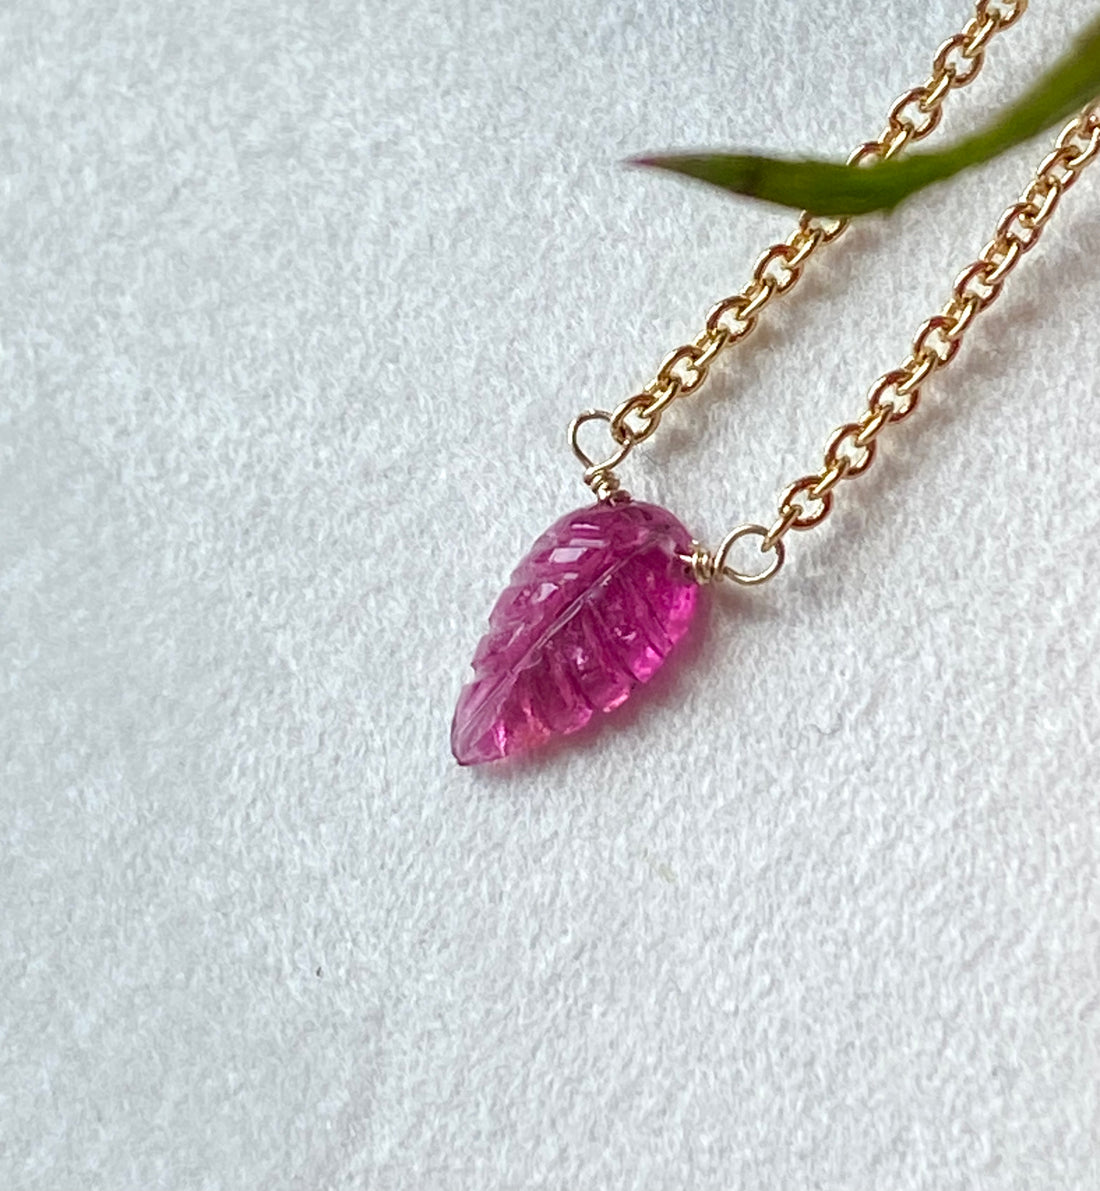 Carved Pink Rubellite Tourmaline Leaf Pendant Necklace